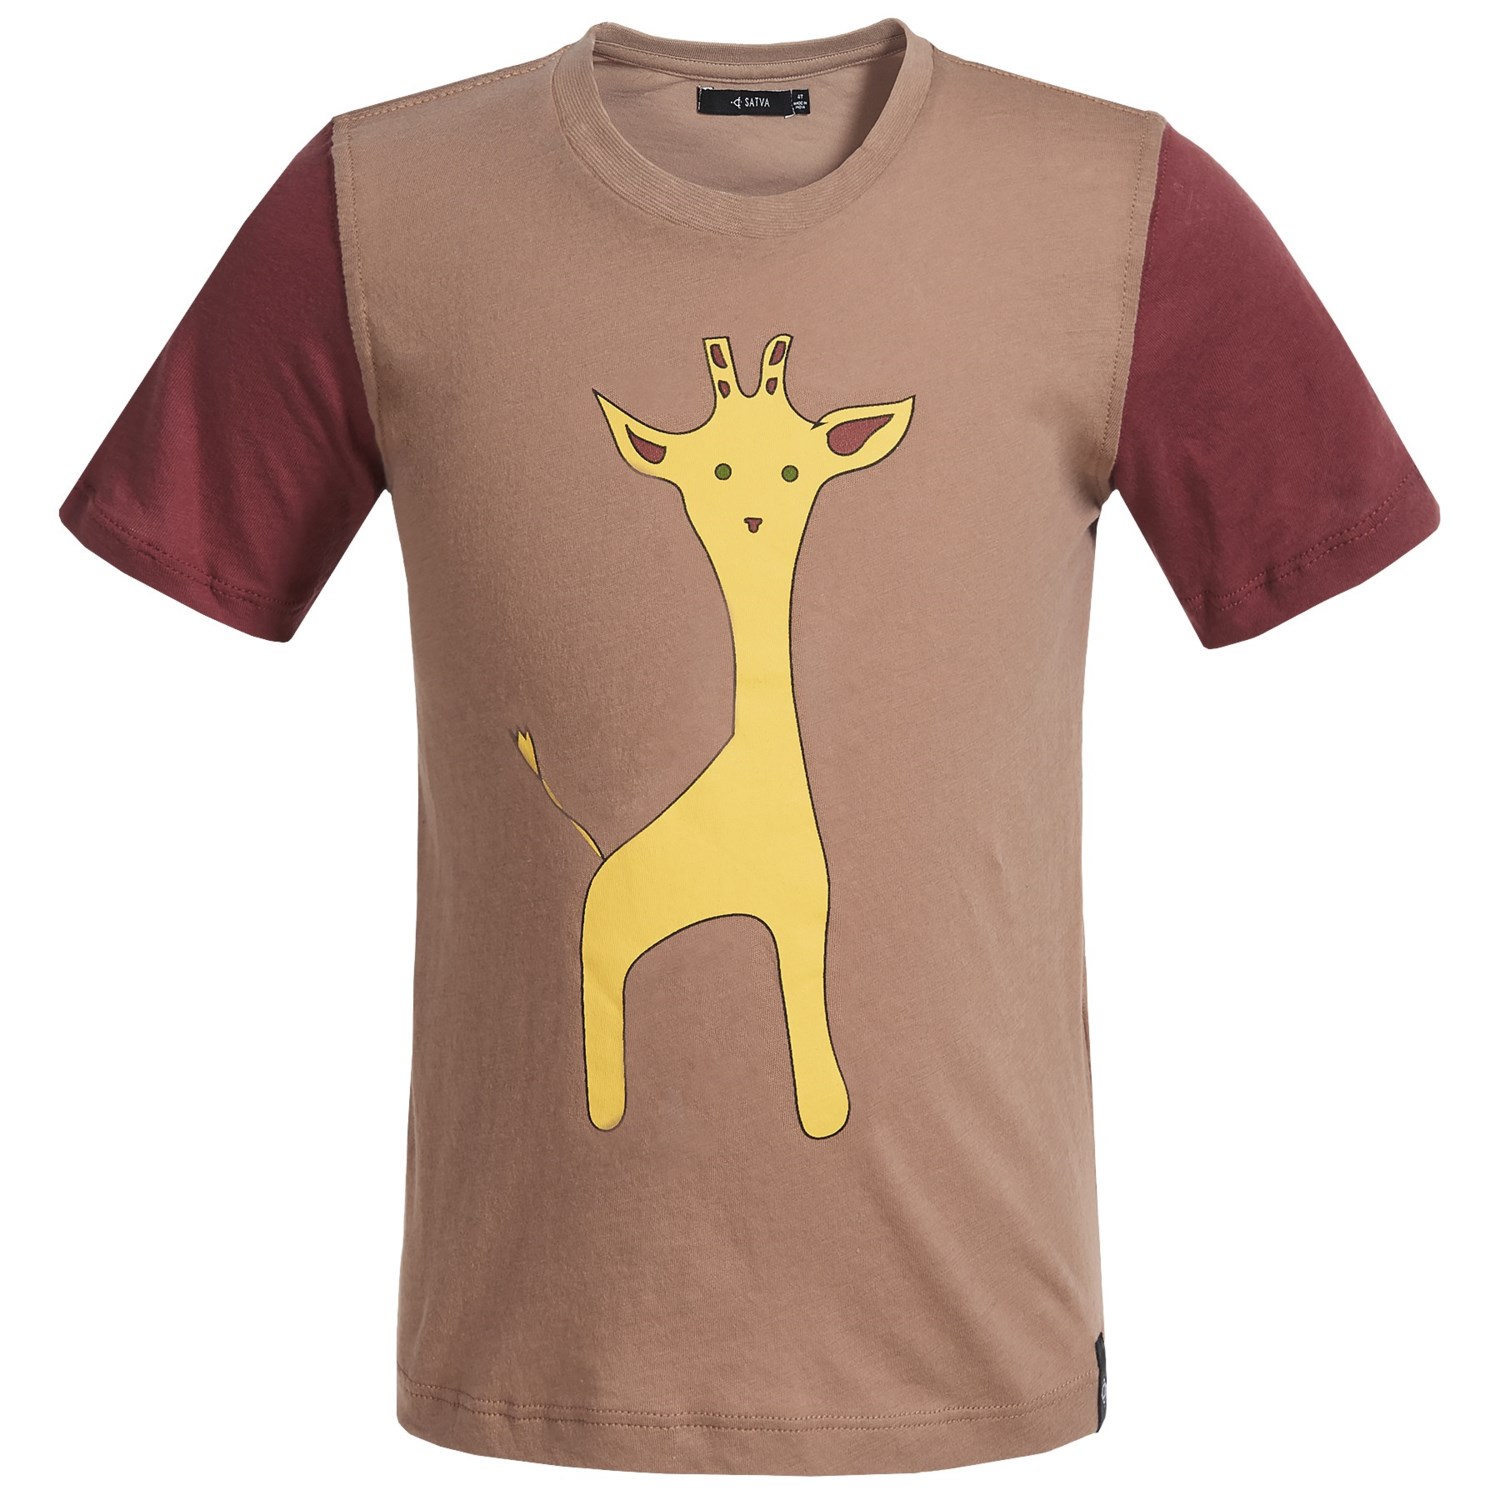 Satva Organic Cotton Color-Block T-Shirt – Short Sleeve (For Toddler Girls)